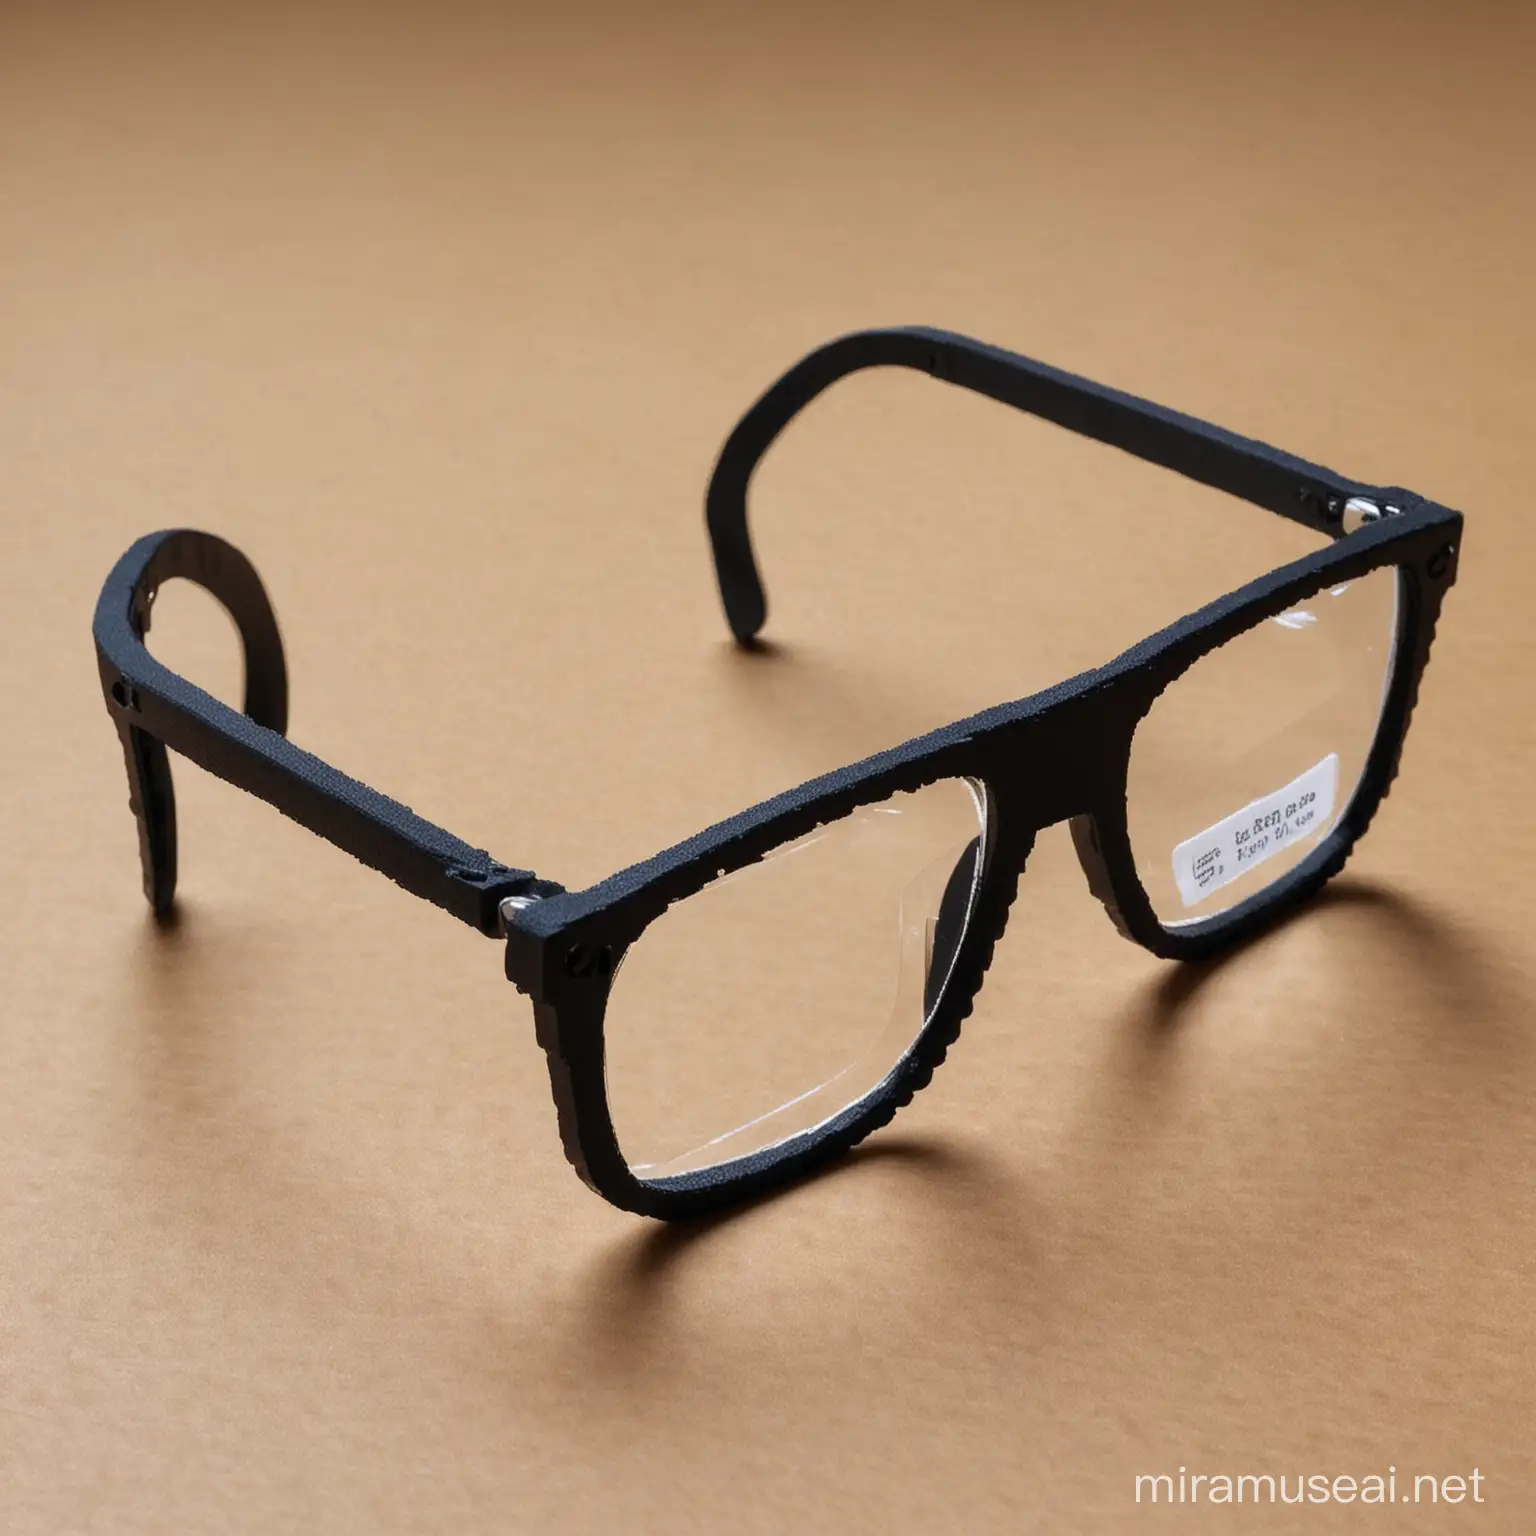 create a 3d printer making a pair of glasses